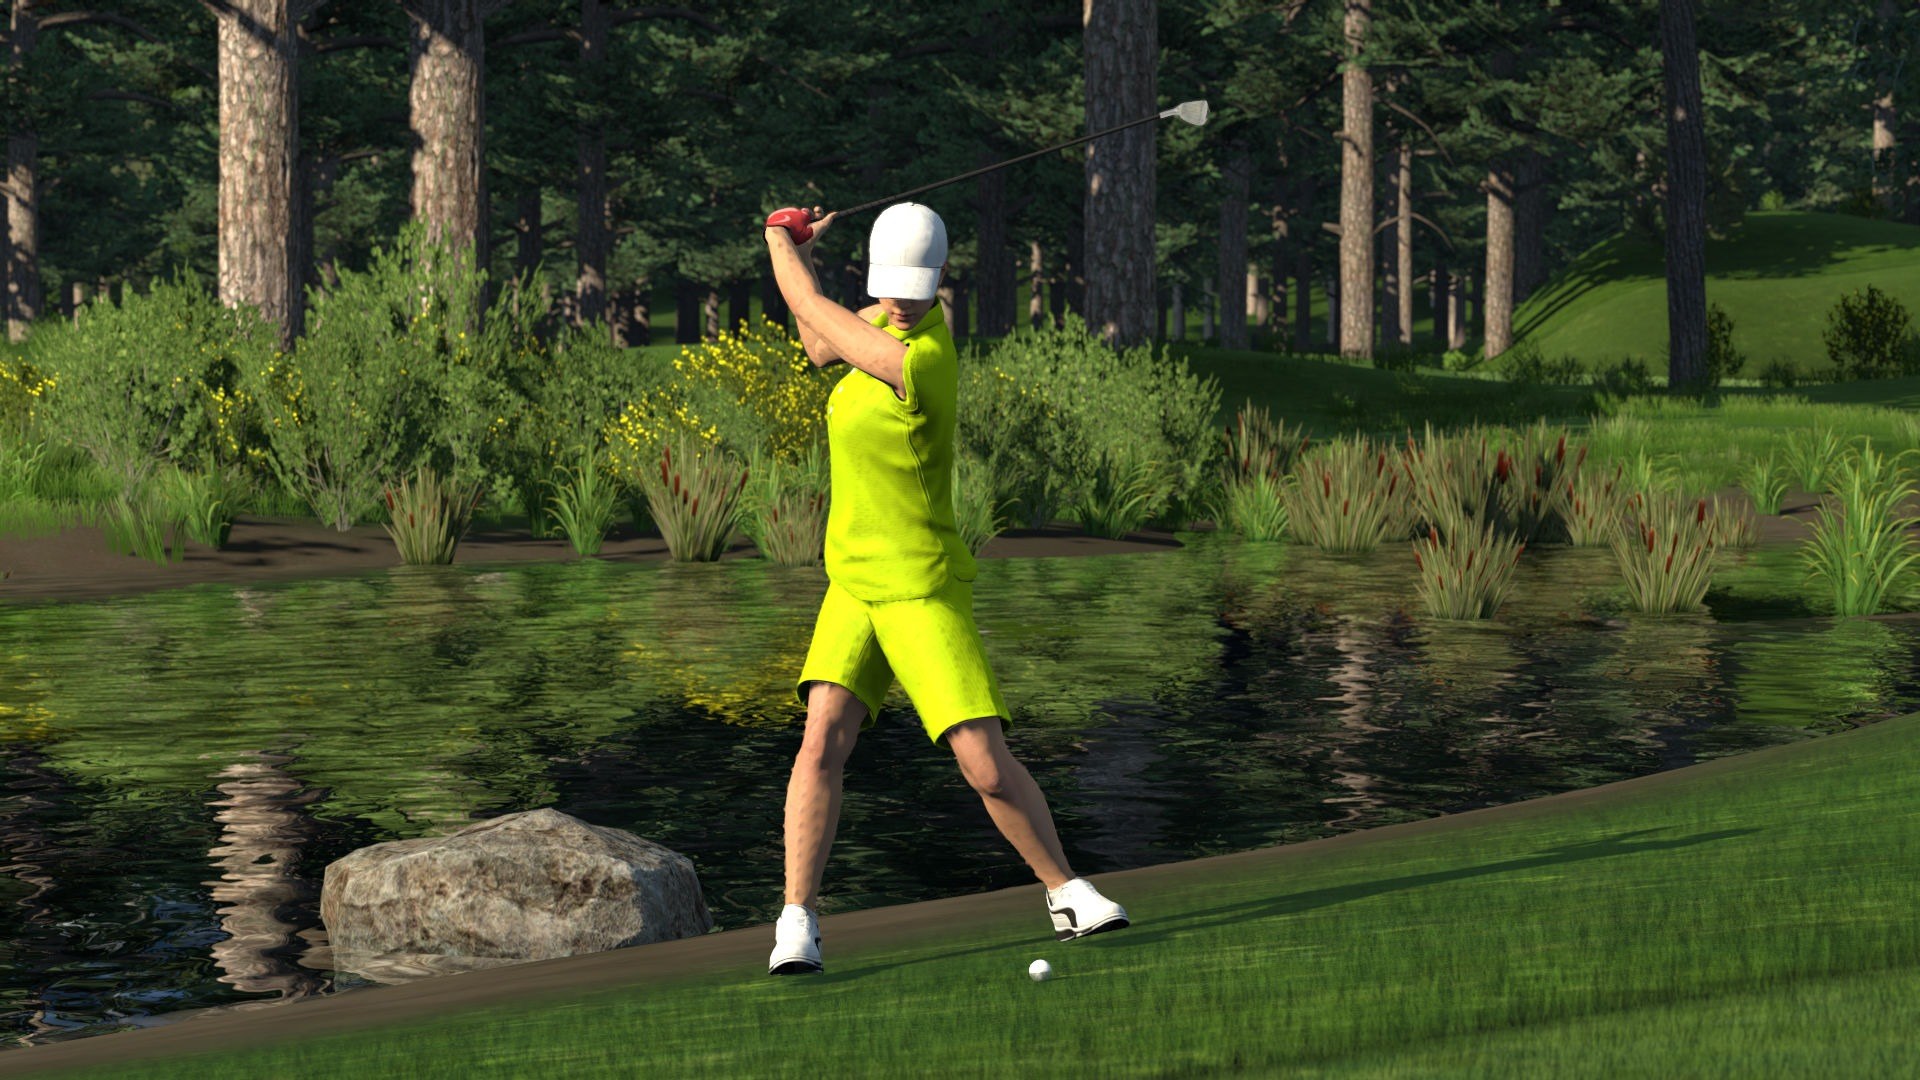 Скриншоты The Golf Club, 17 картинок из онлайн игры The Golf Club, новые сн...